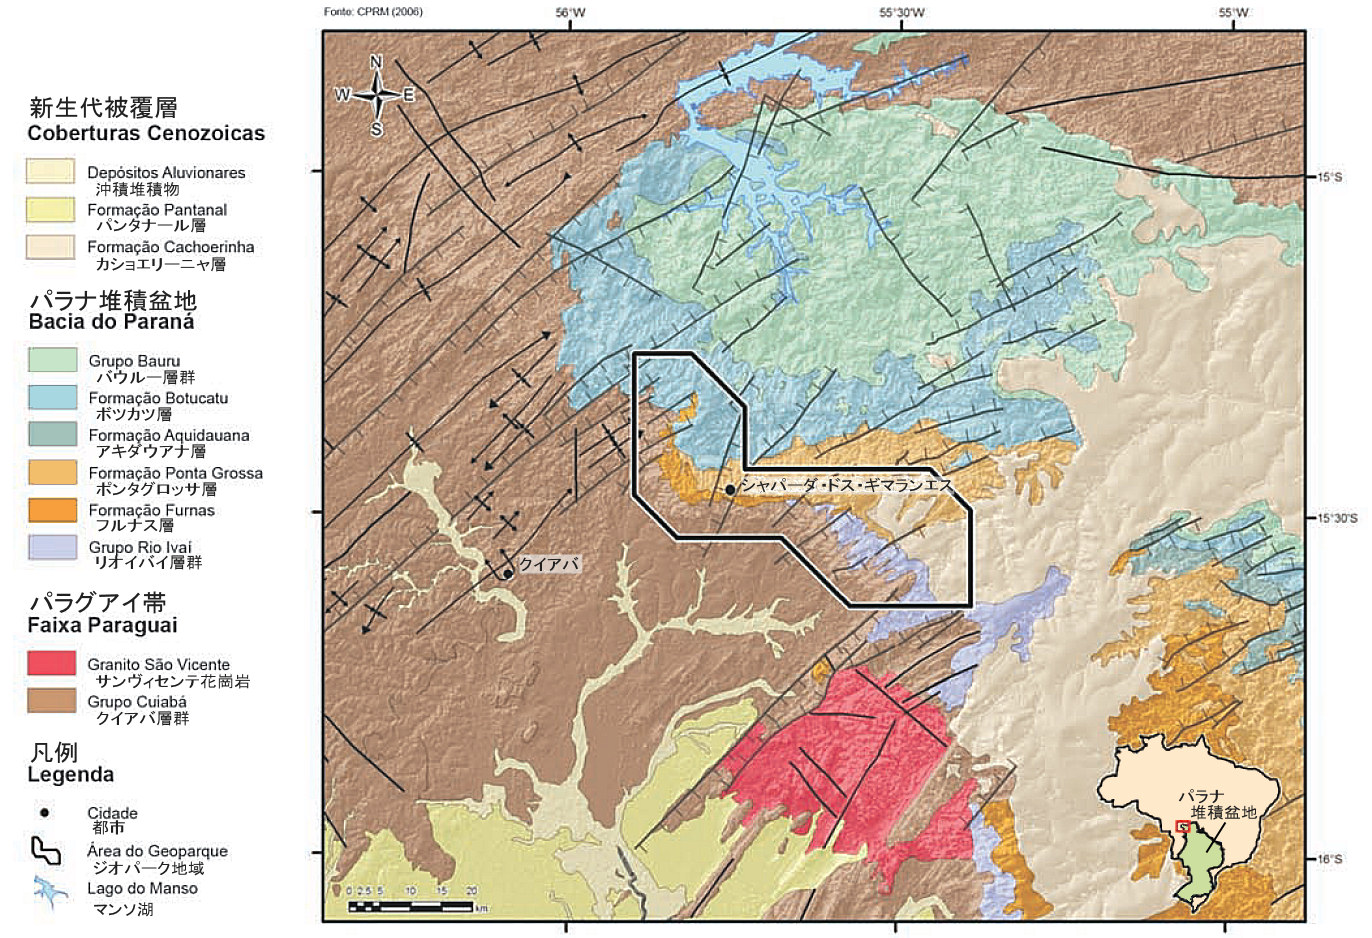 Geological map of Chapada dos Guimaraes